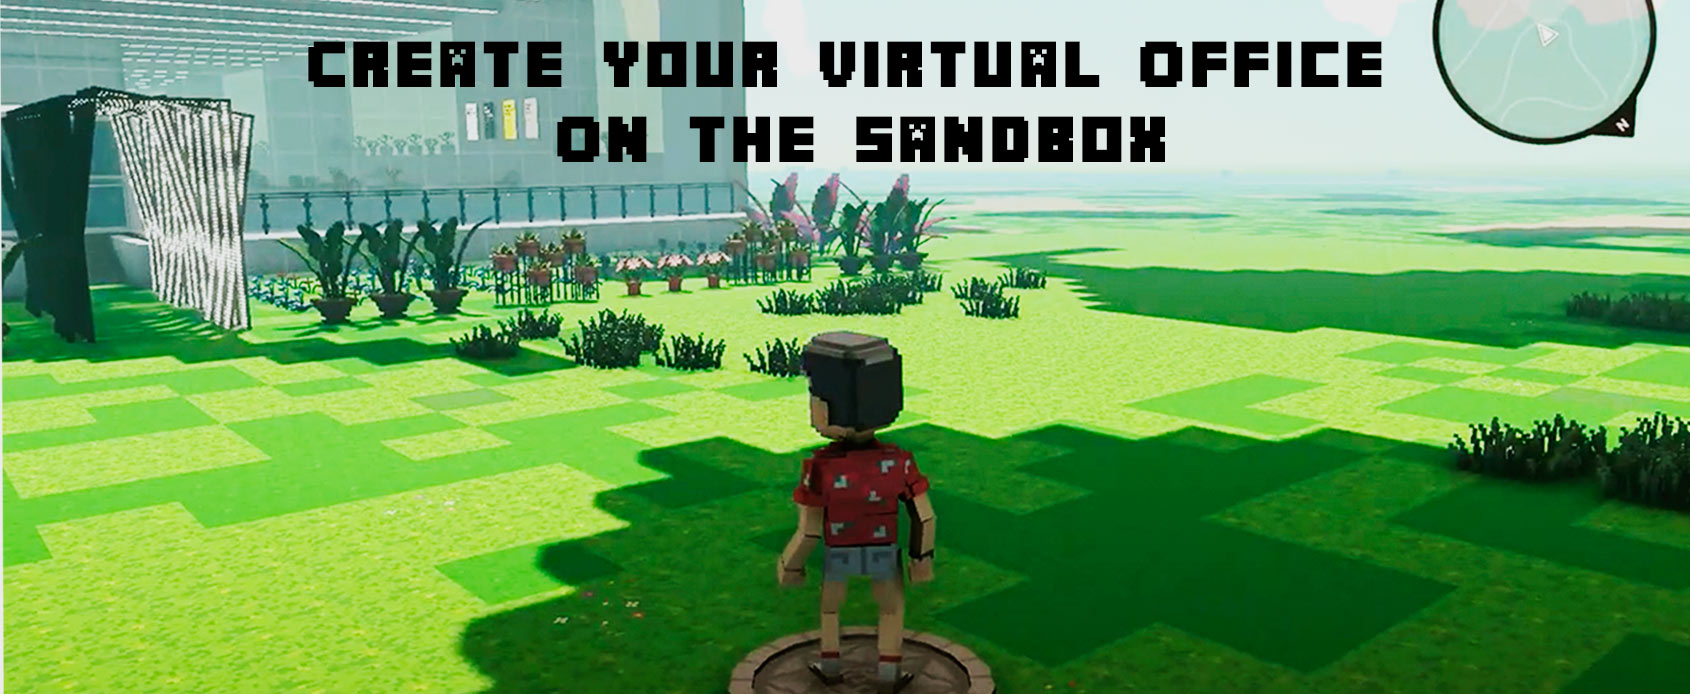 virtual office on sandbox